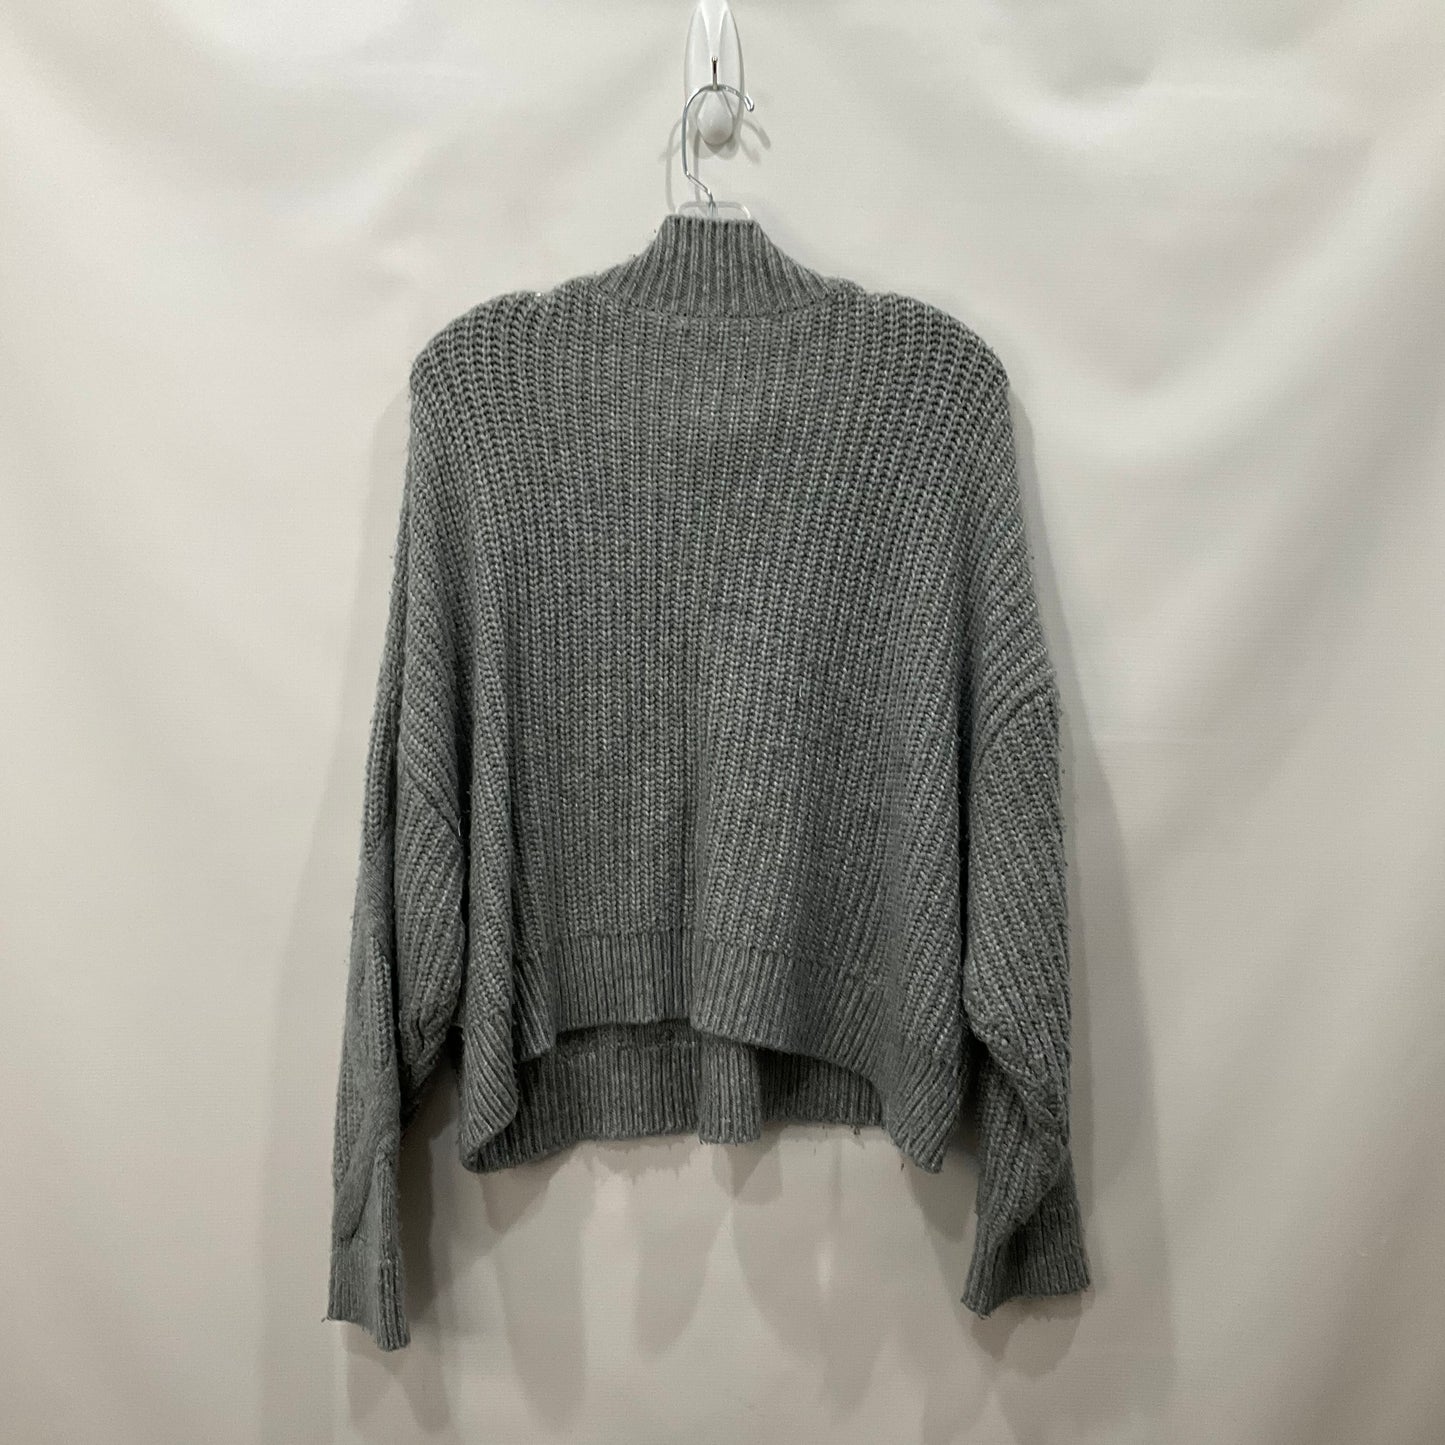 Sweater By Elizabeth And James  Size: Xxl